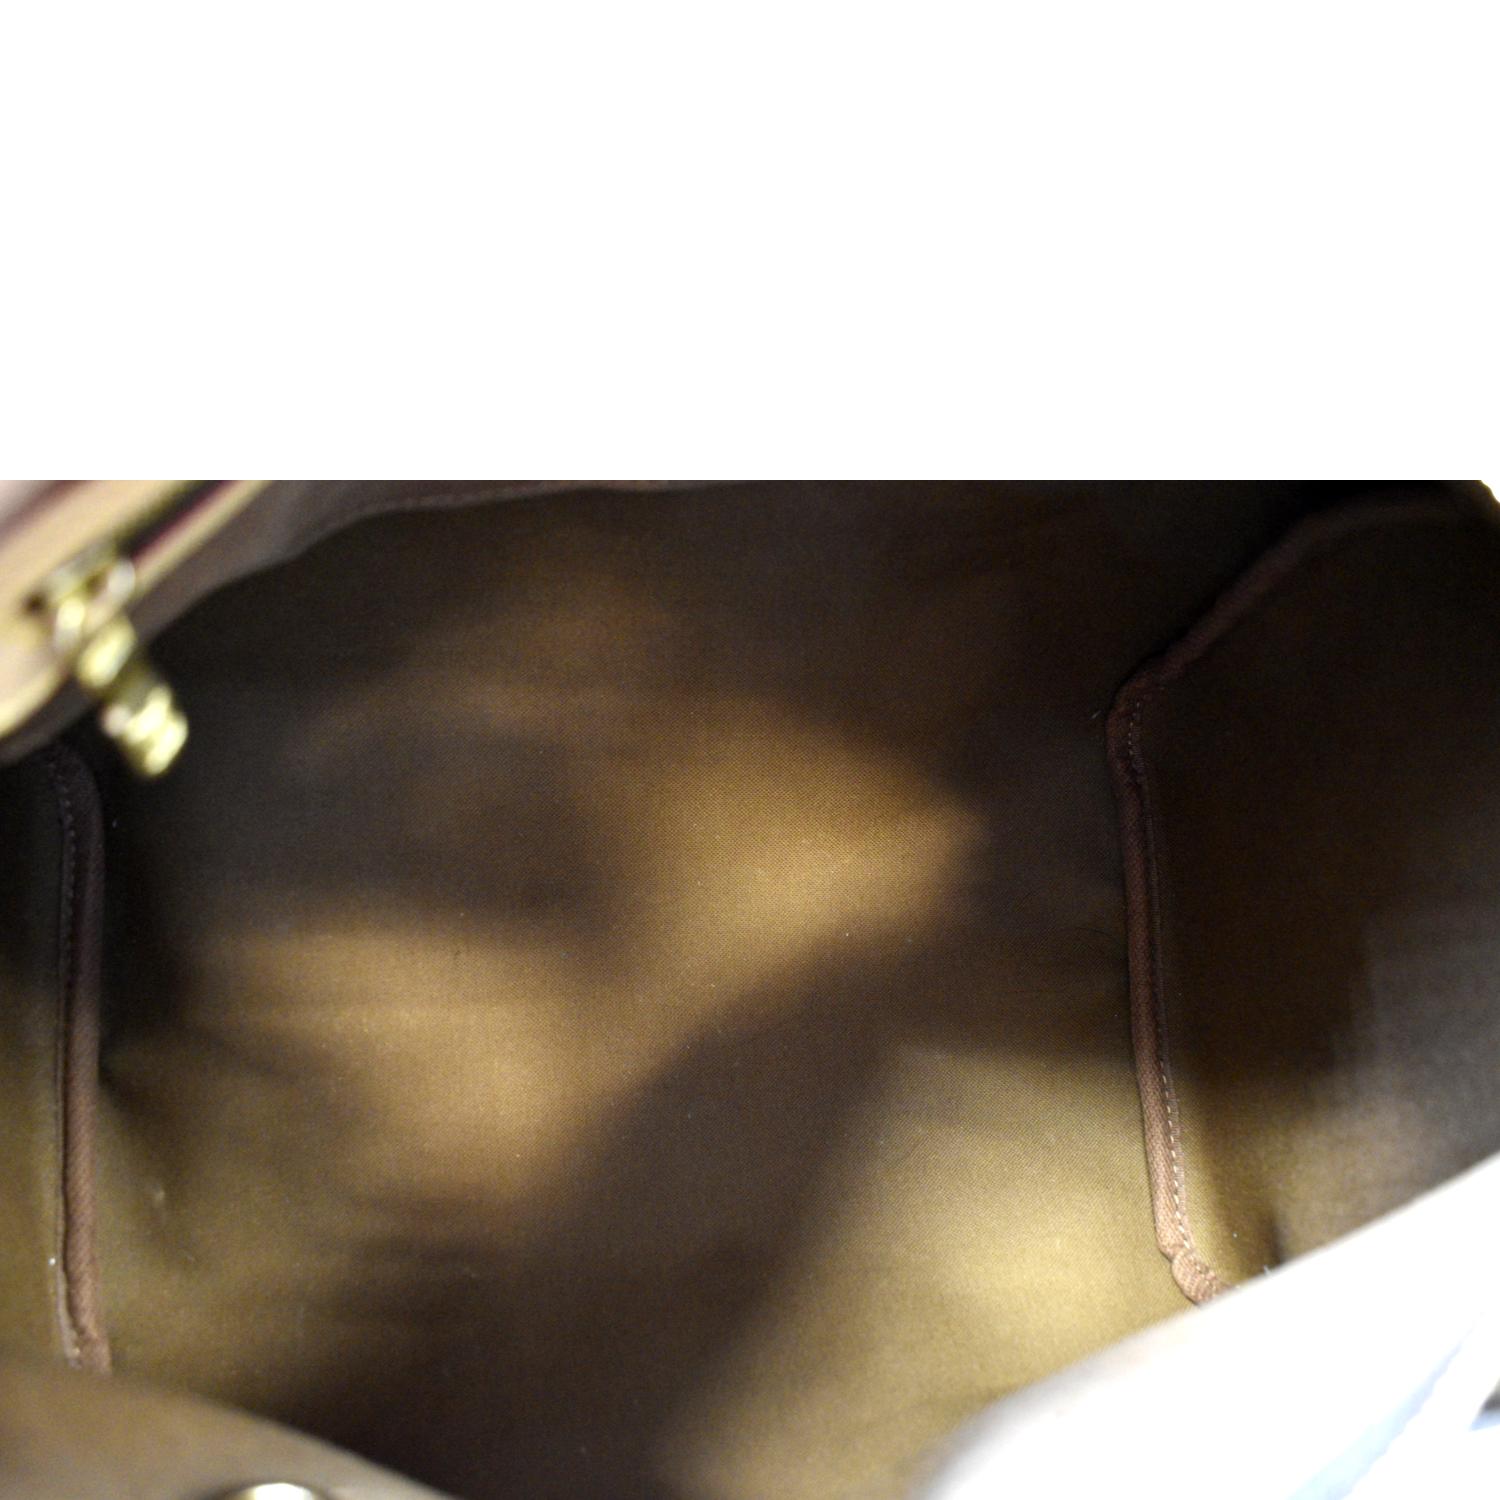 Speedy Bag Making / Boston Bag Making #LeatherAddict EP43 